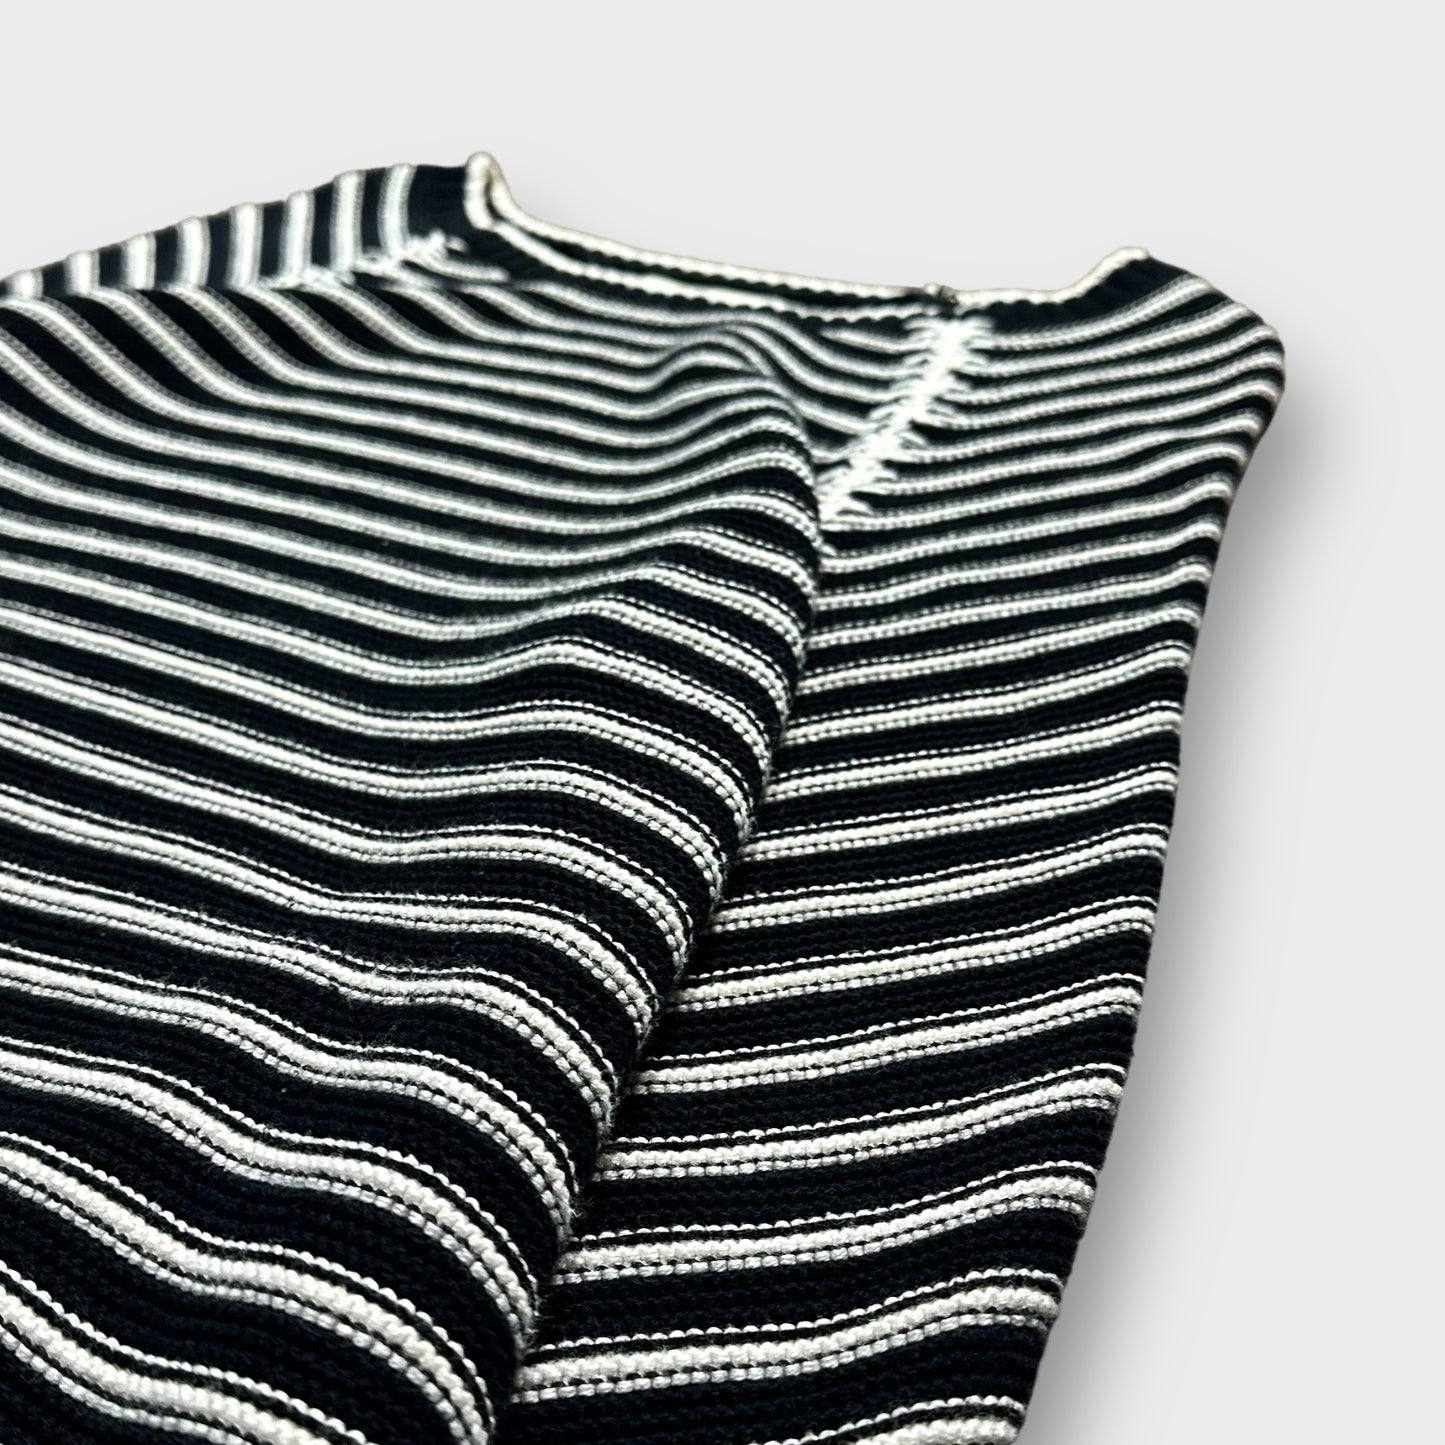 Design border pattern knit sweater